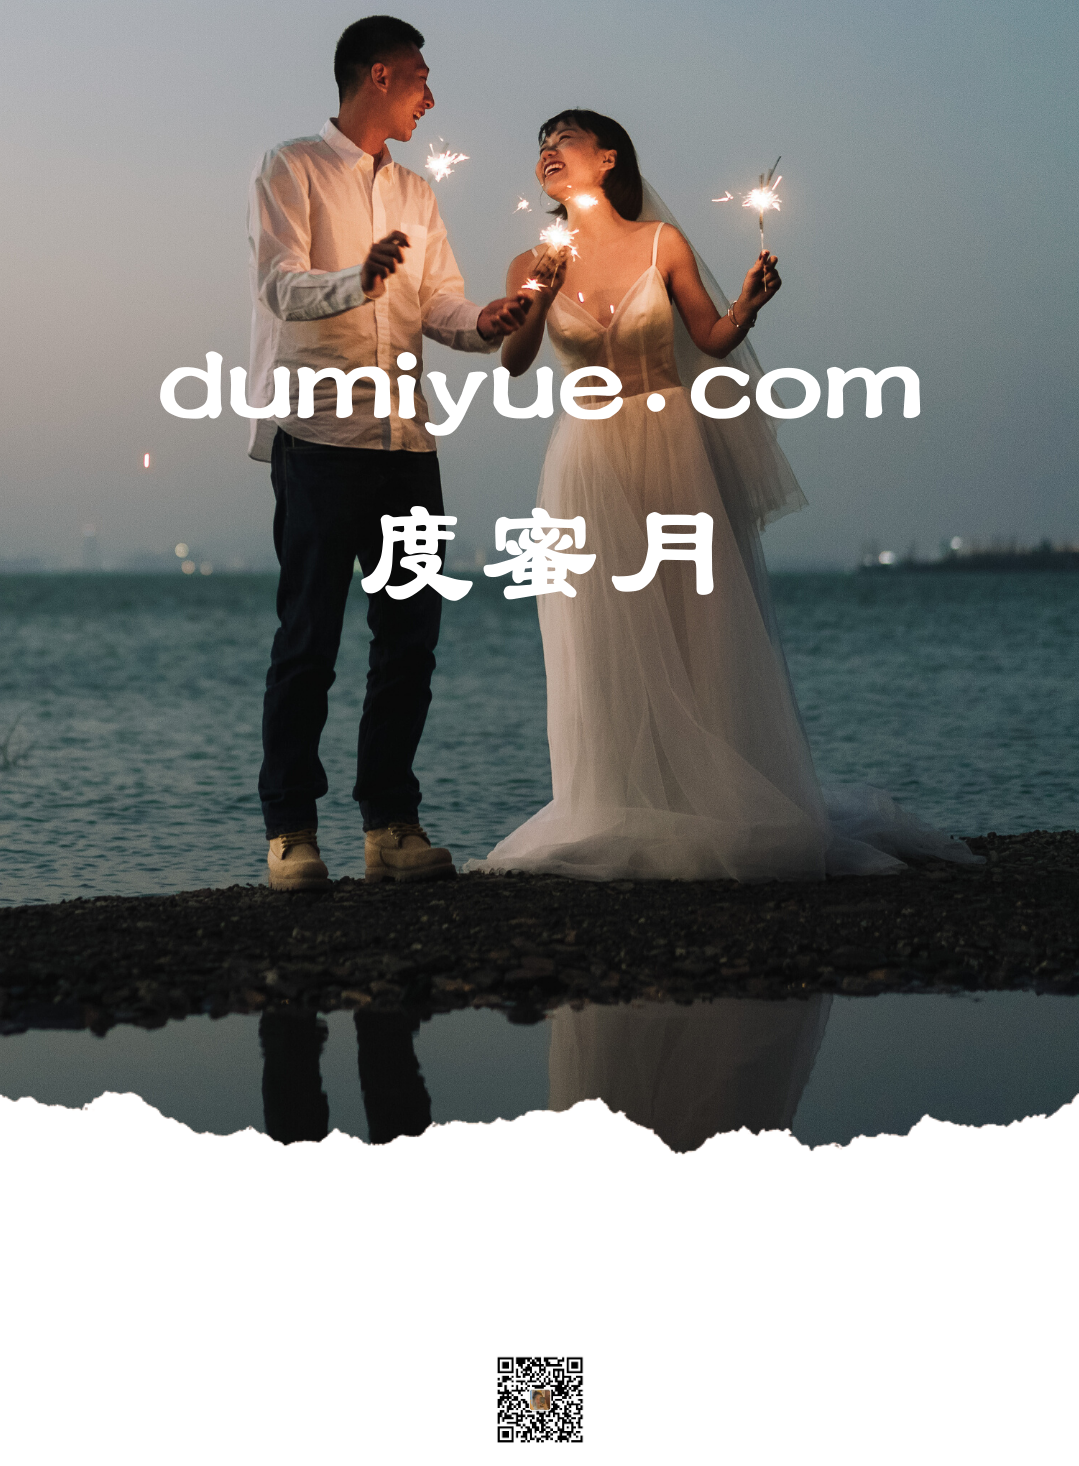 dumiyue.com